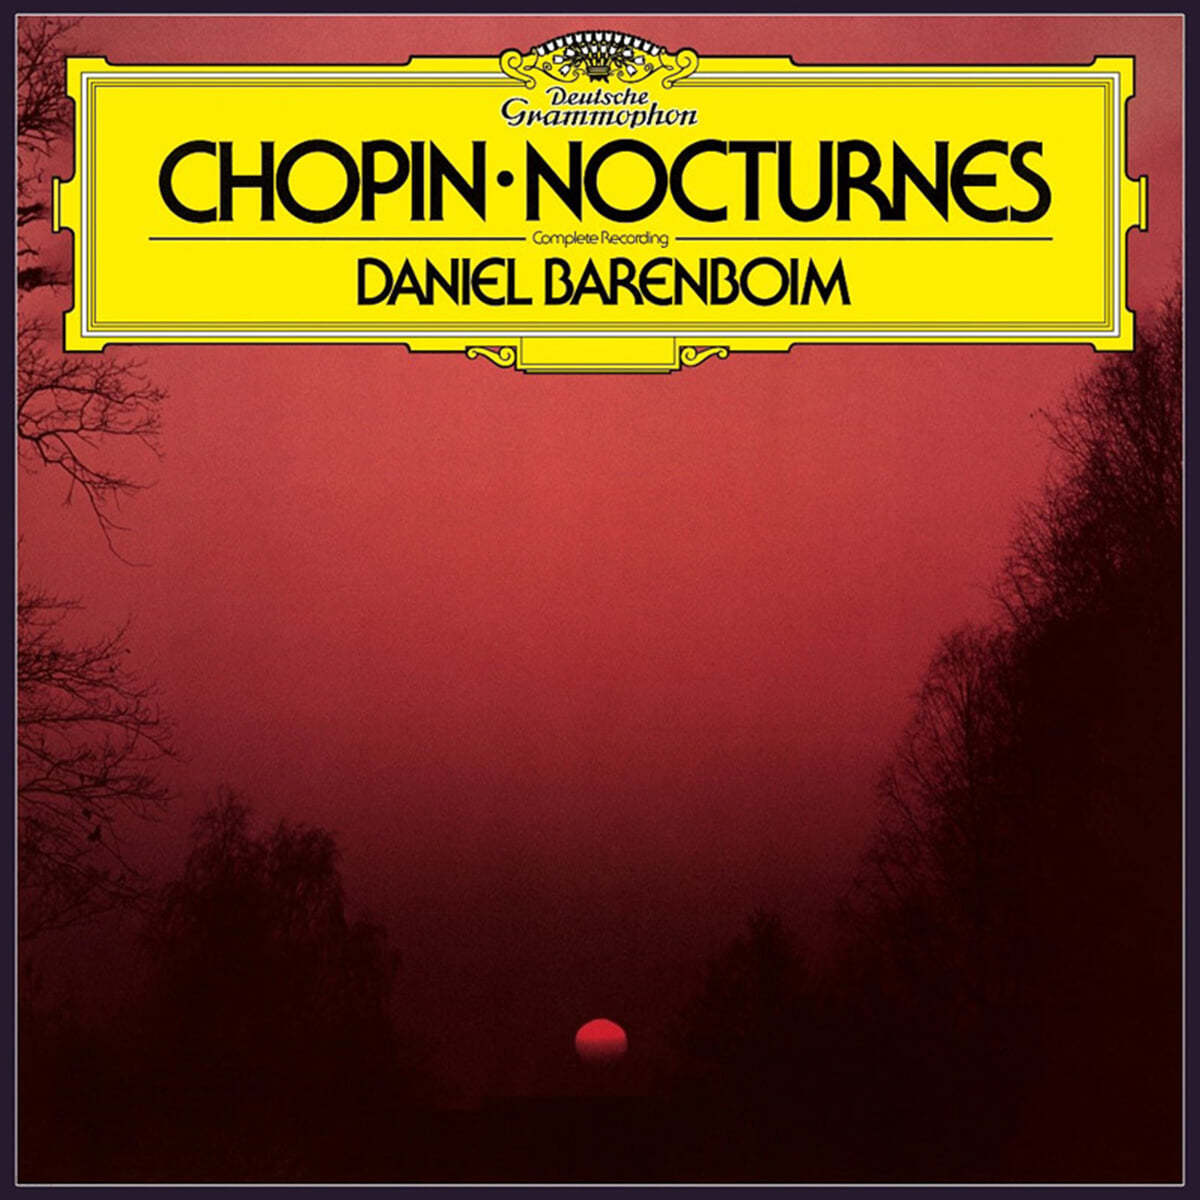 Daniel Barenboim 쇼팽: 녹턴 (Chopin: Nocturnes) [2LP]